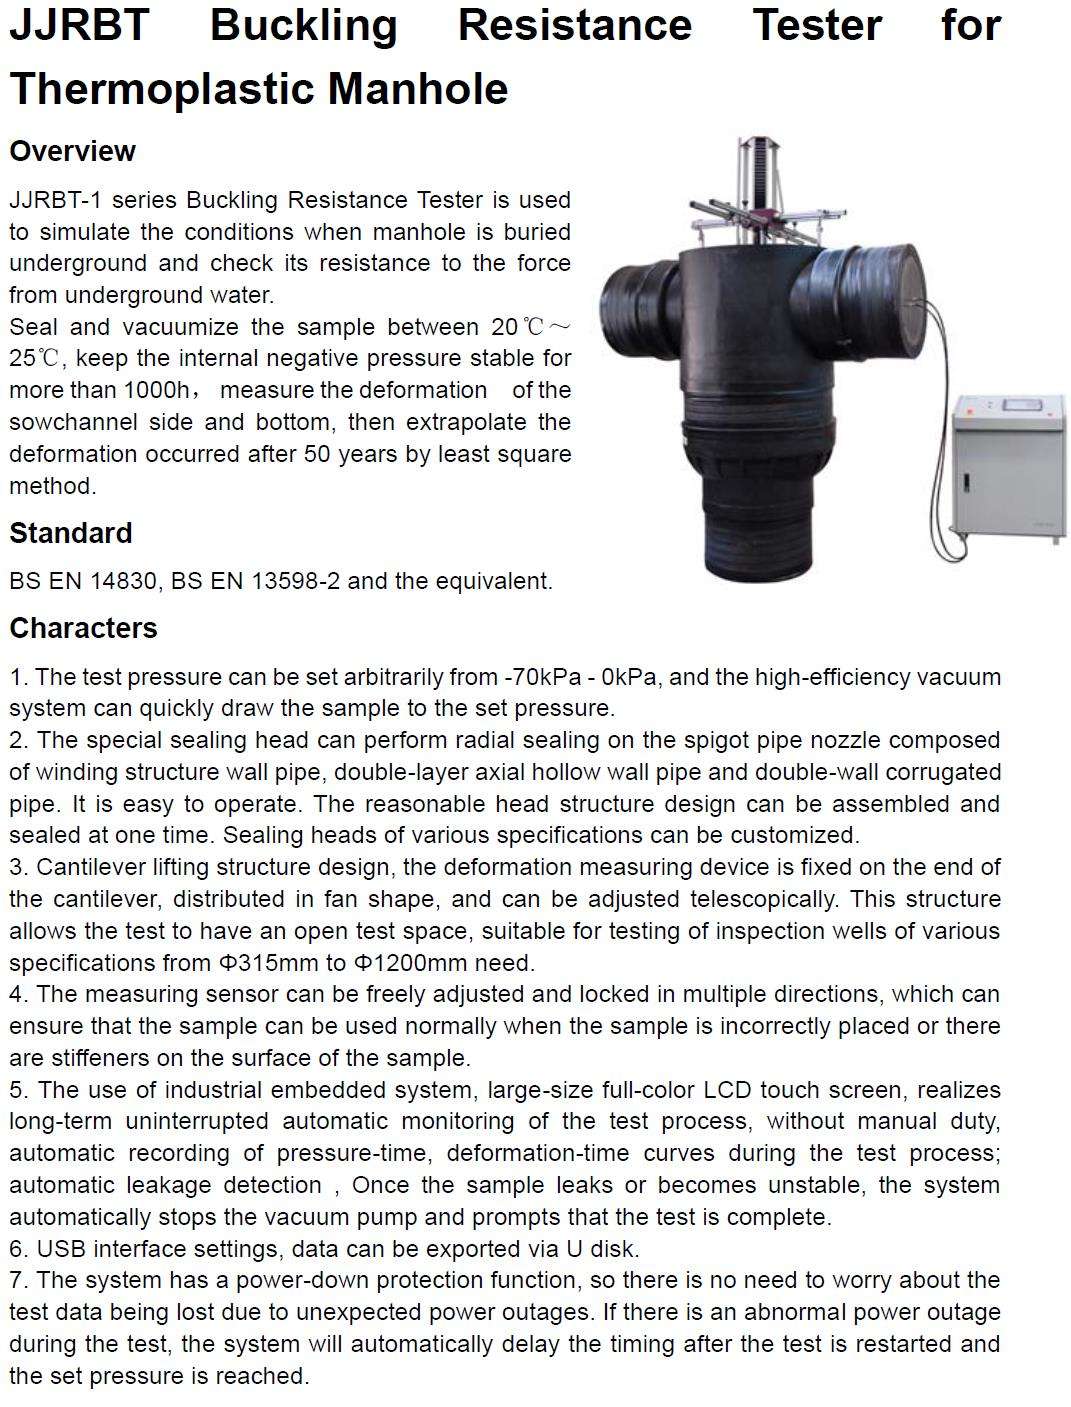 Buckling resistance tester thermoplastic manhole BS EN 14830:2006 BS EN 13598-2:2009